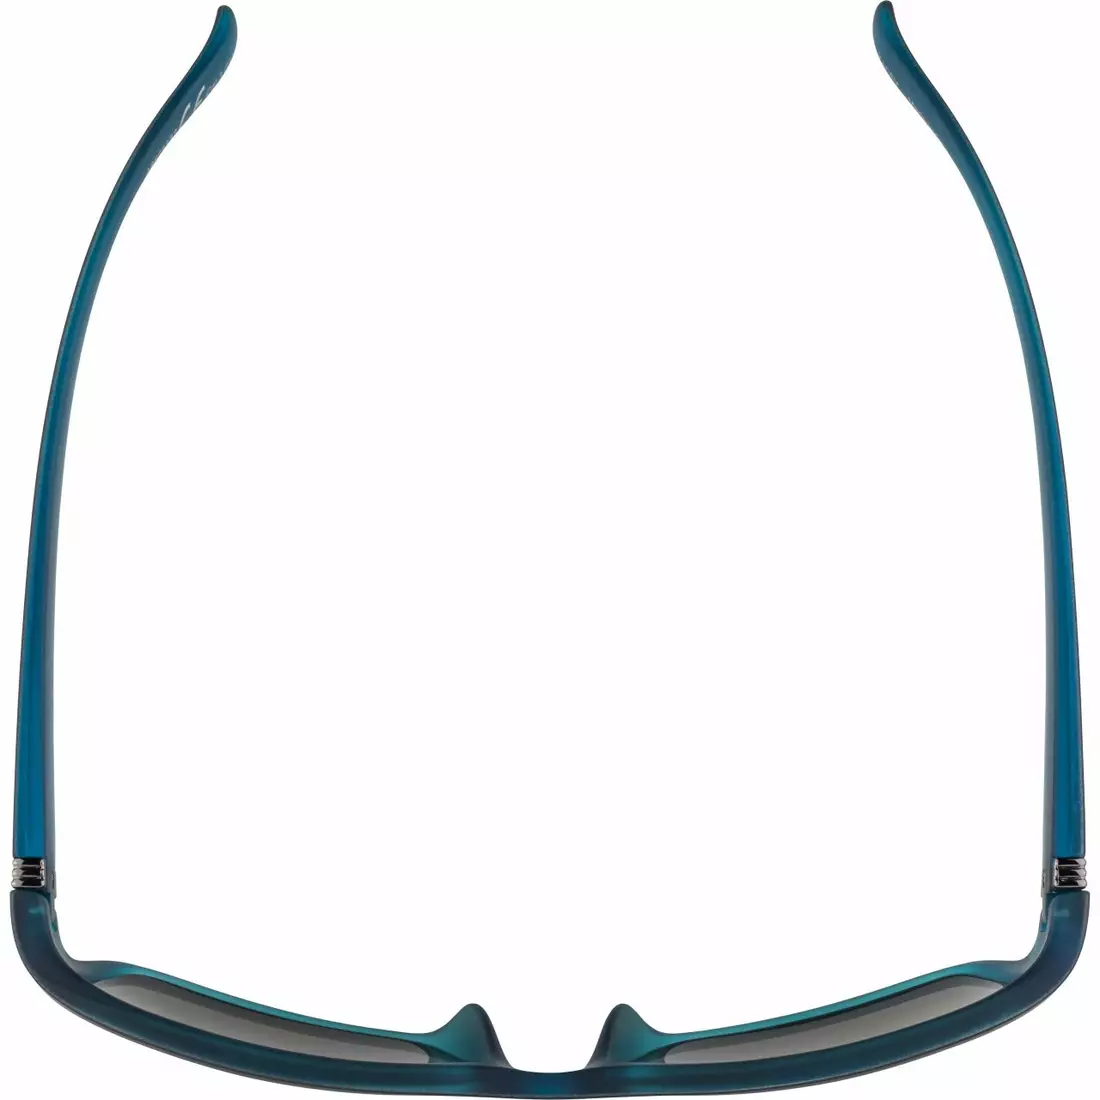 ALPINA športové okuliare kacey black matt-blue A8523333